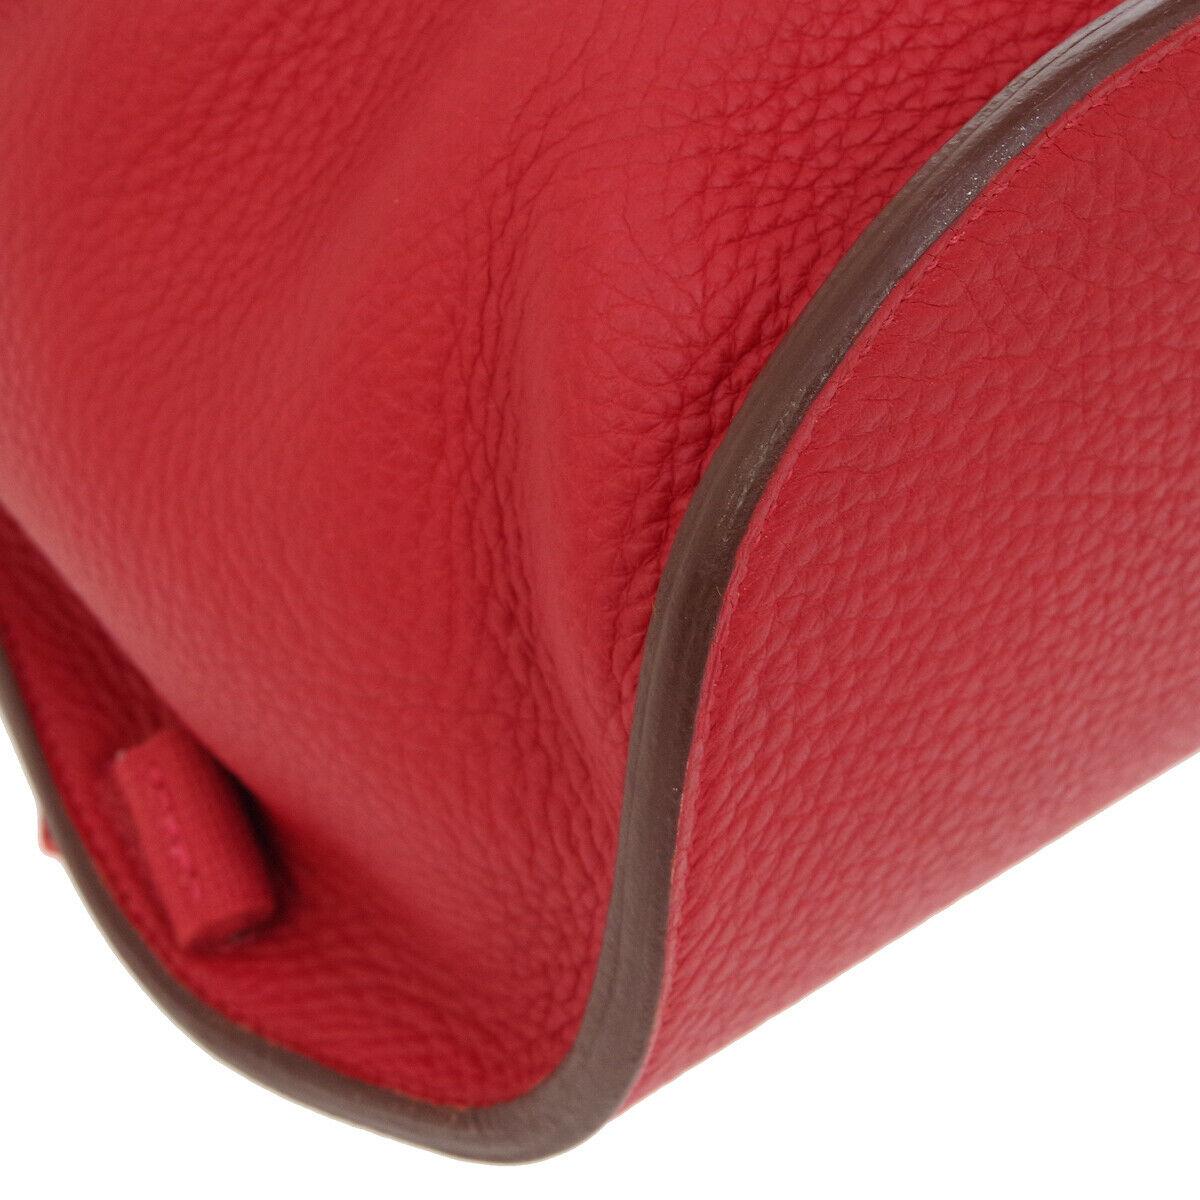  Hermes Red Leather Fabric Men's Women's Travel Carryall Backpack Bag 1